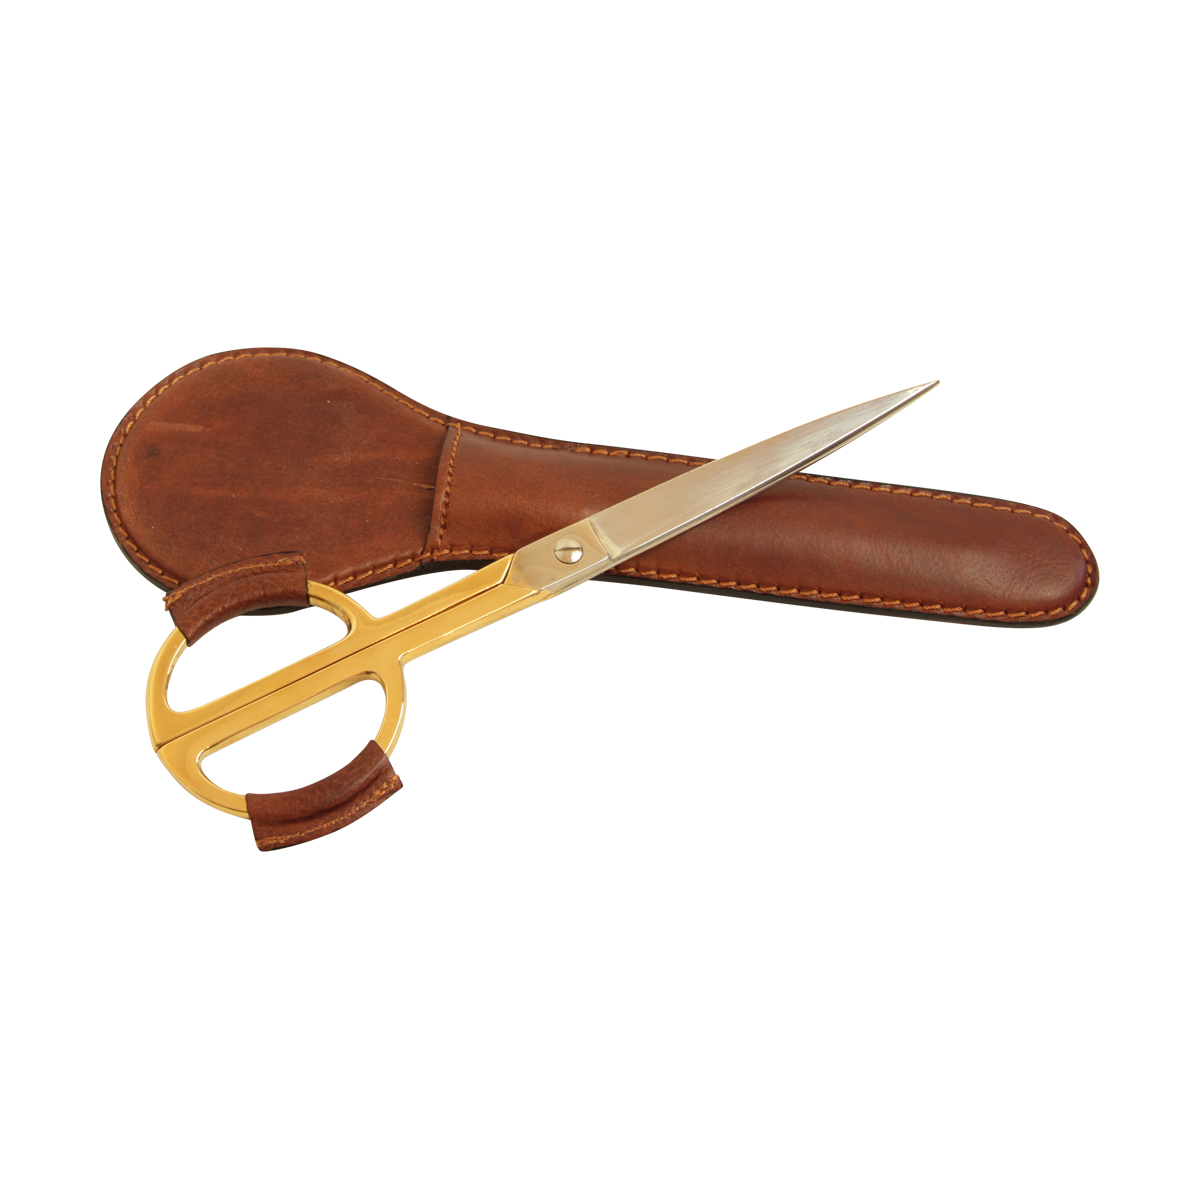 Leather scissors holder | 753605MA UK | Old Angler Firenze